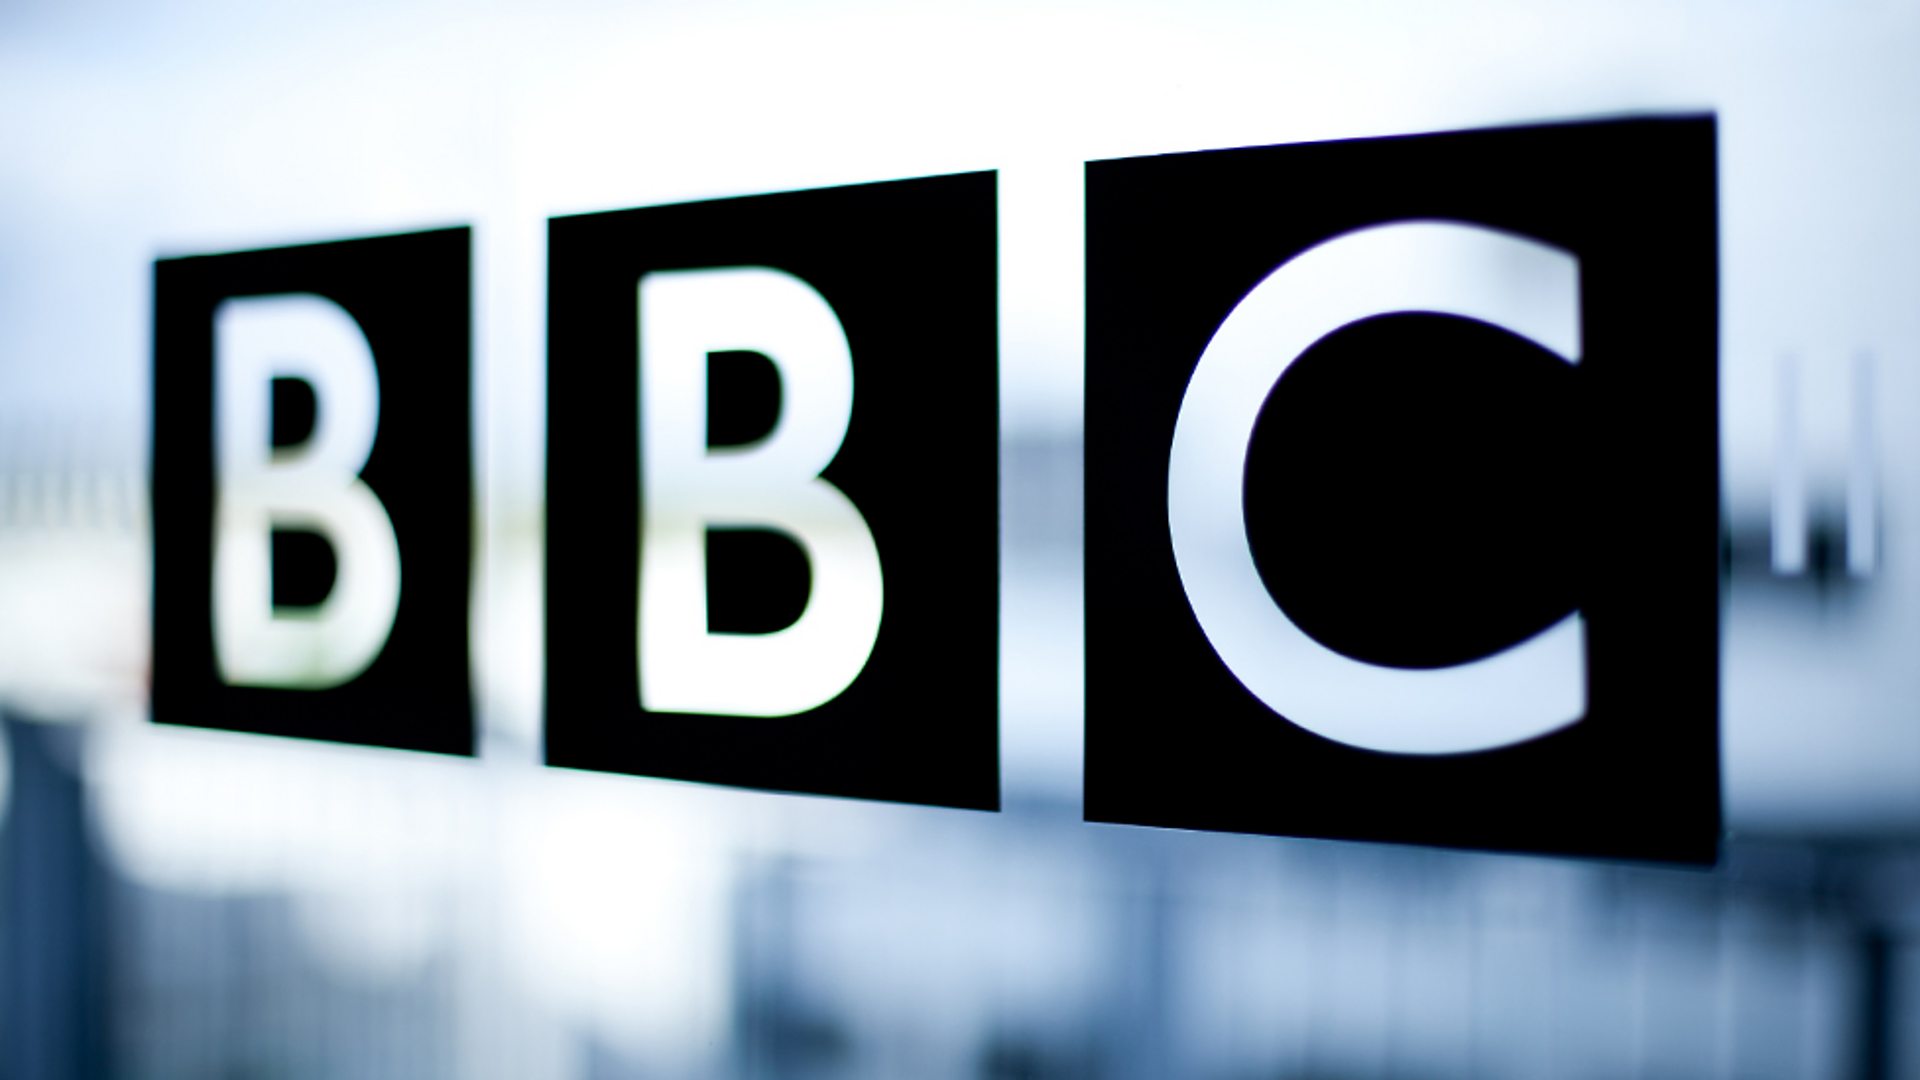 Bbc co uk. Bbc би-би-си. Логотип би би си. Канал bbc. ВВС Телеканал.